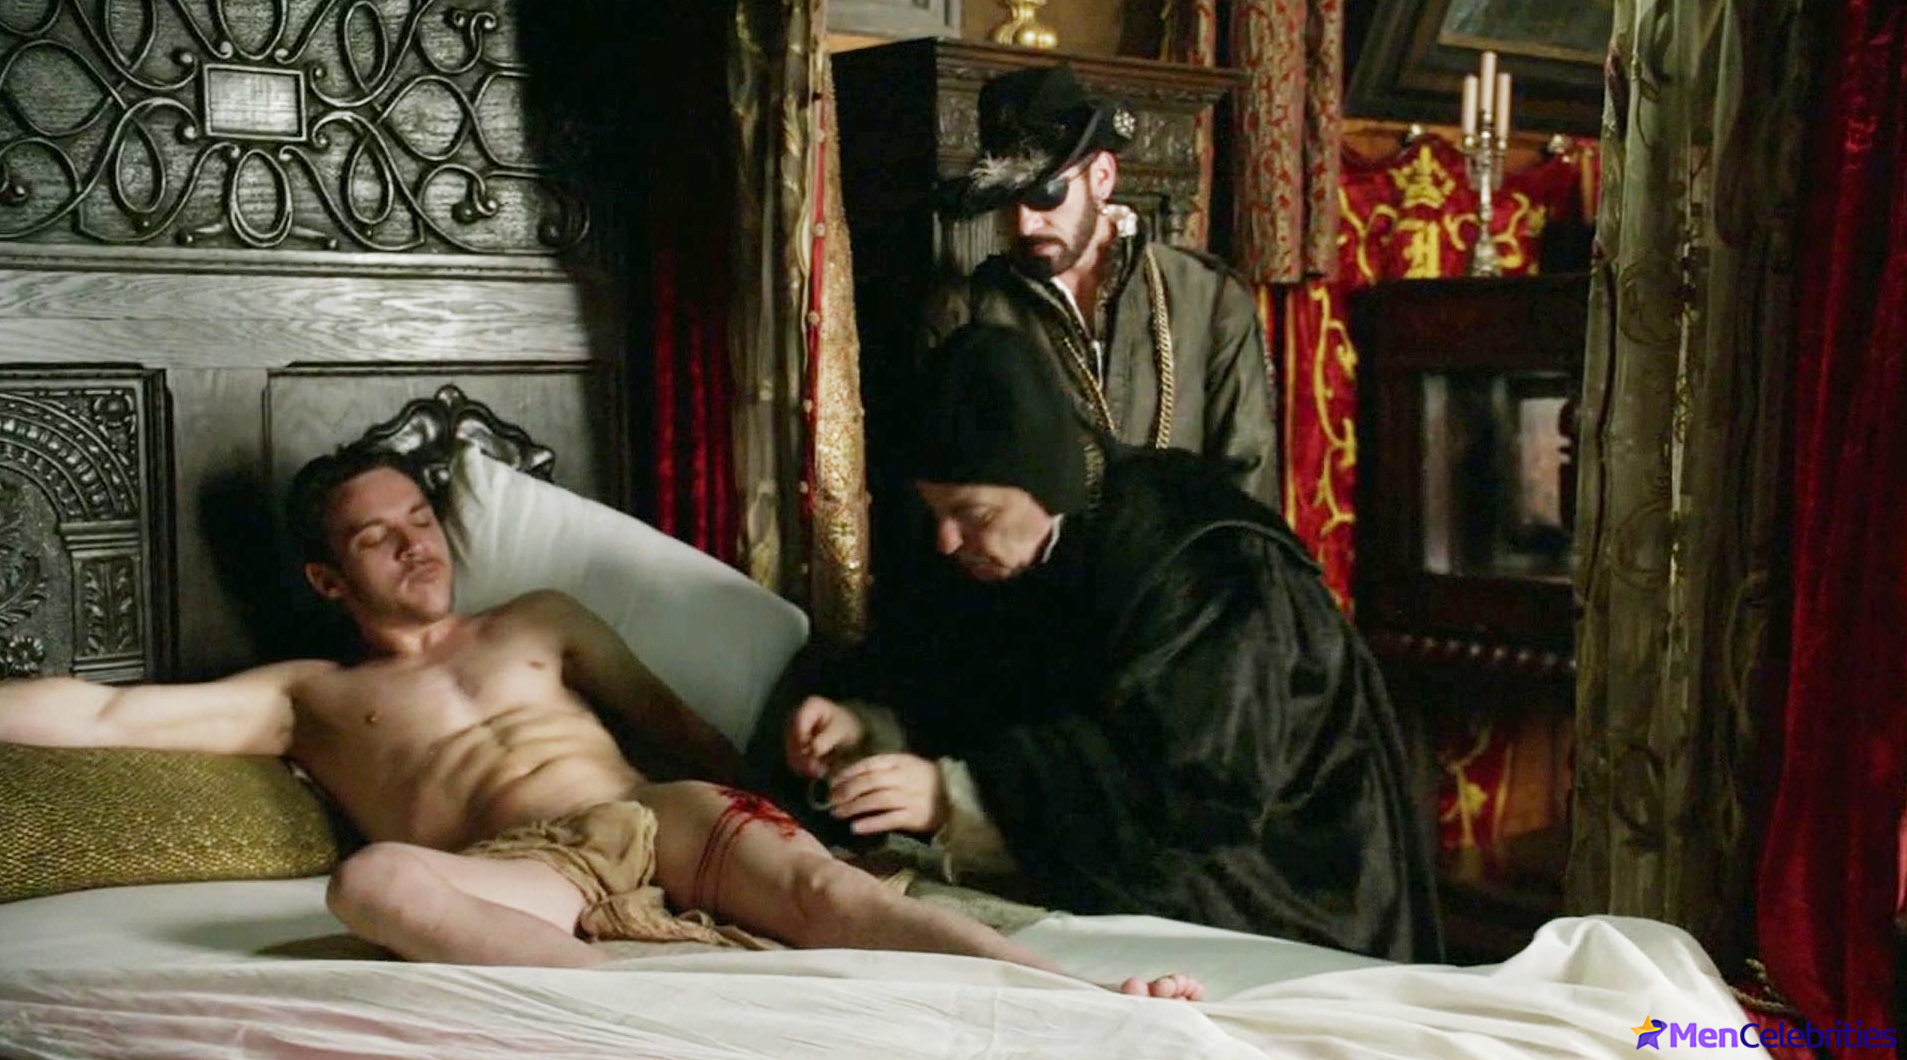 Jonathan Rhys Meyers frontal nude movie scenes.